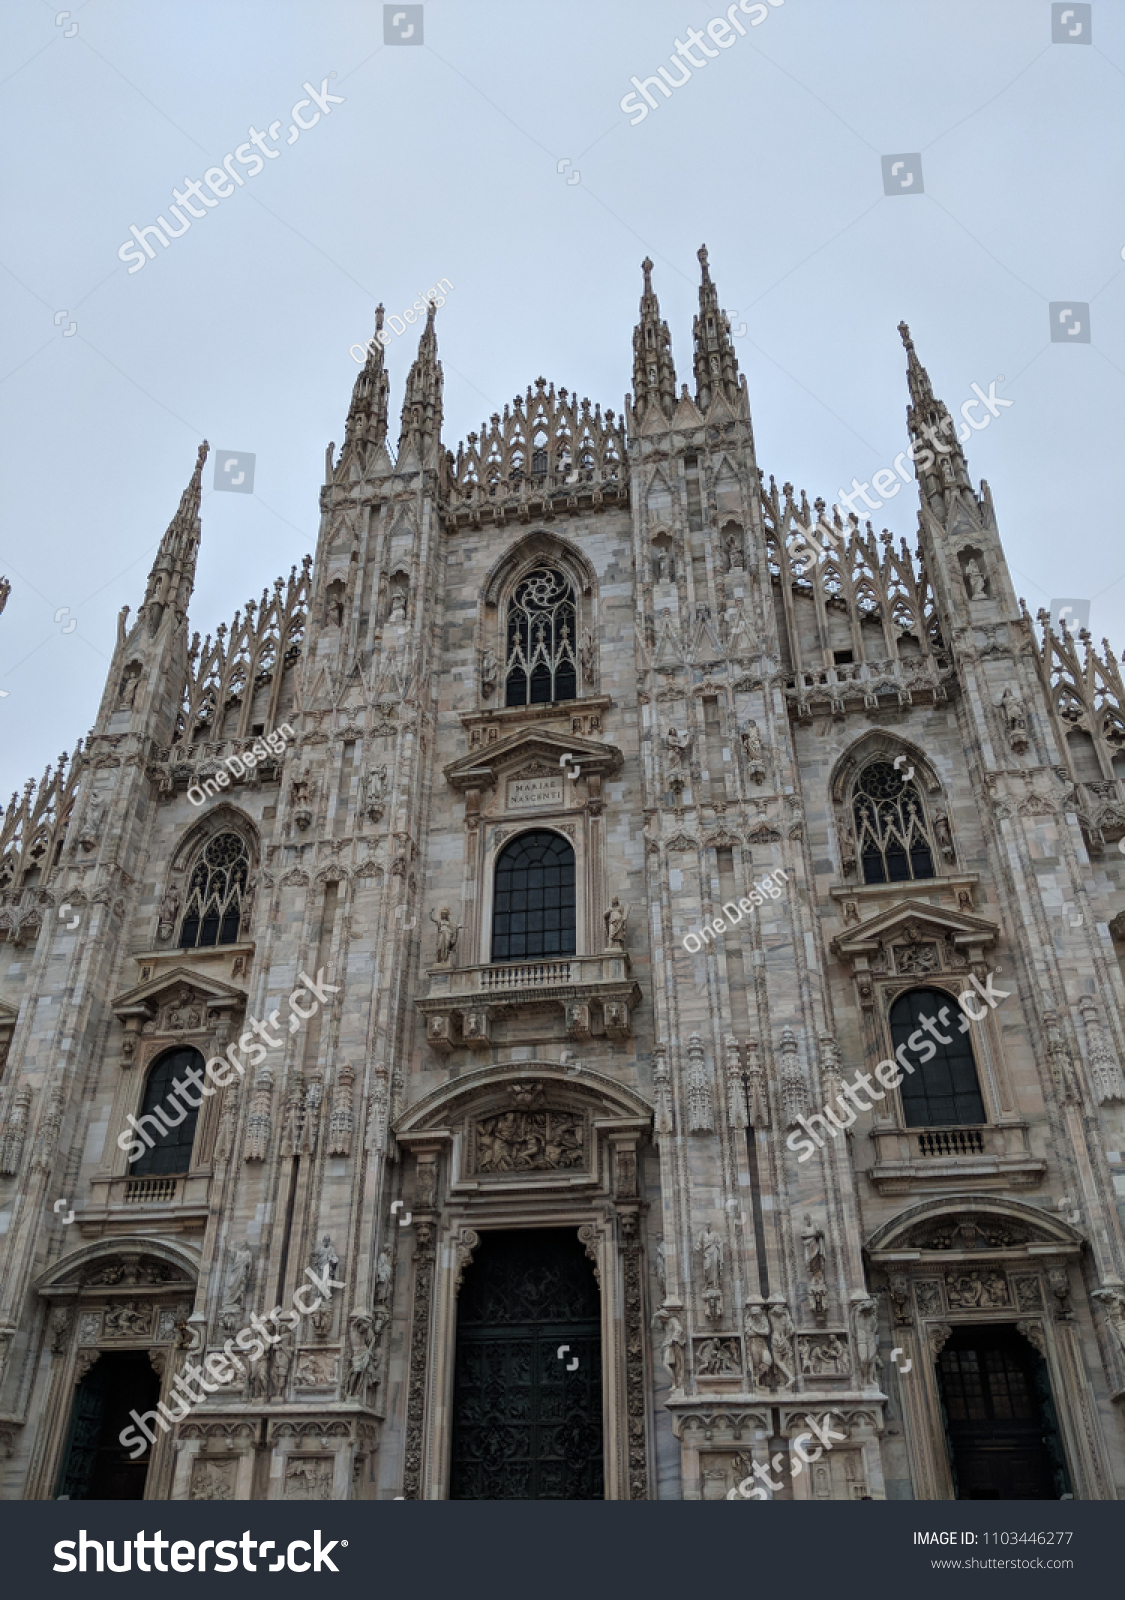 Doumo di Milano, the Cathedral Church of Milan, Lombardo Italy. Europe. Popular tourist attraction. #1103446277